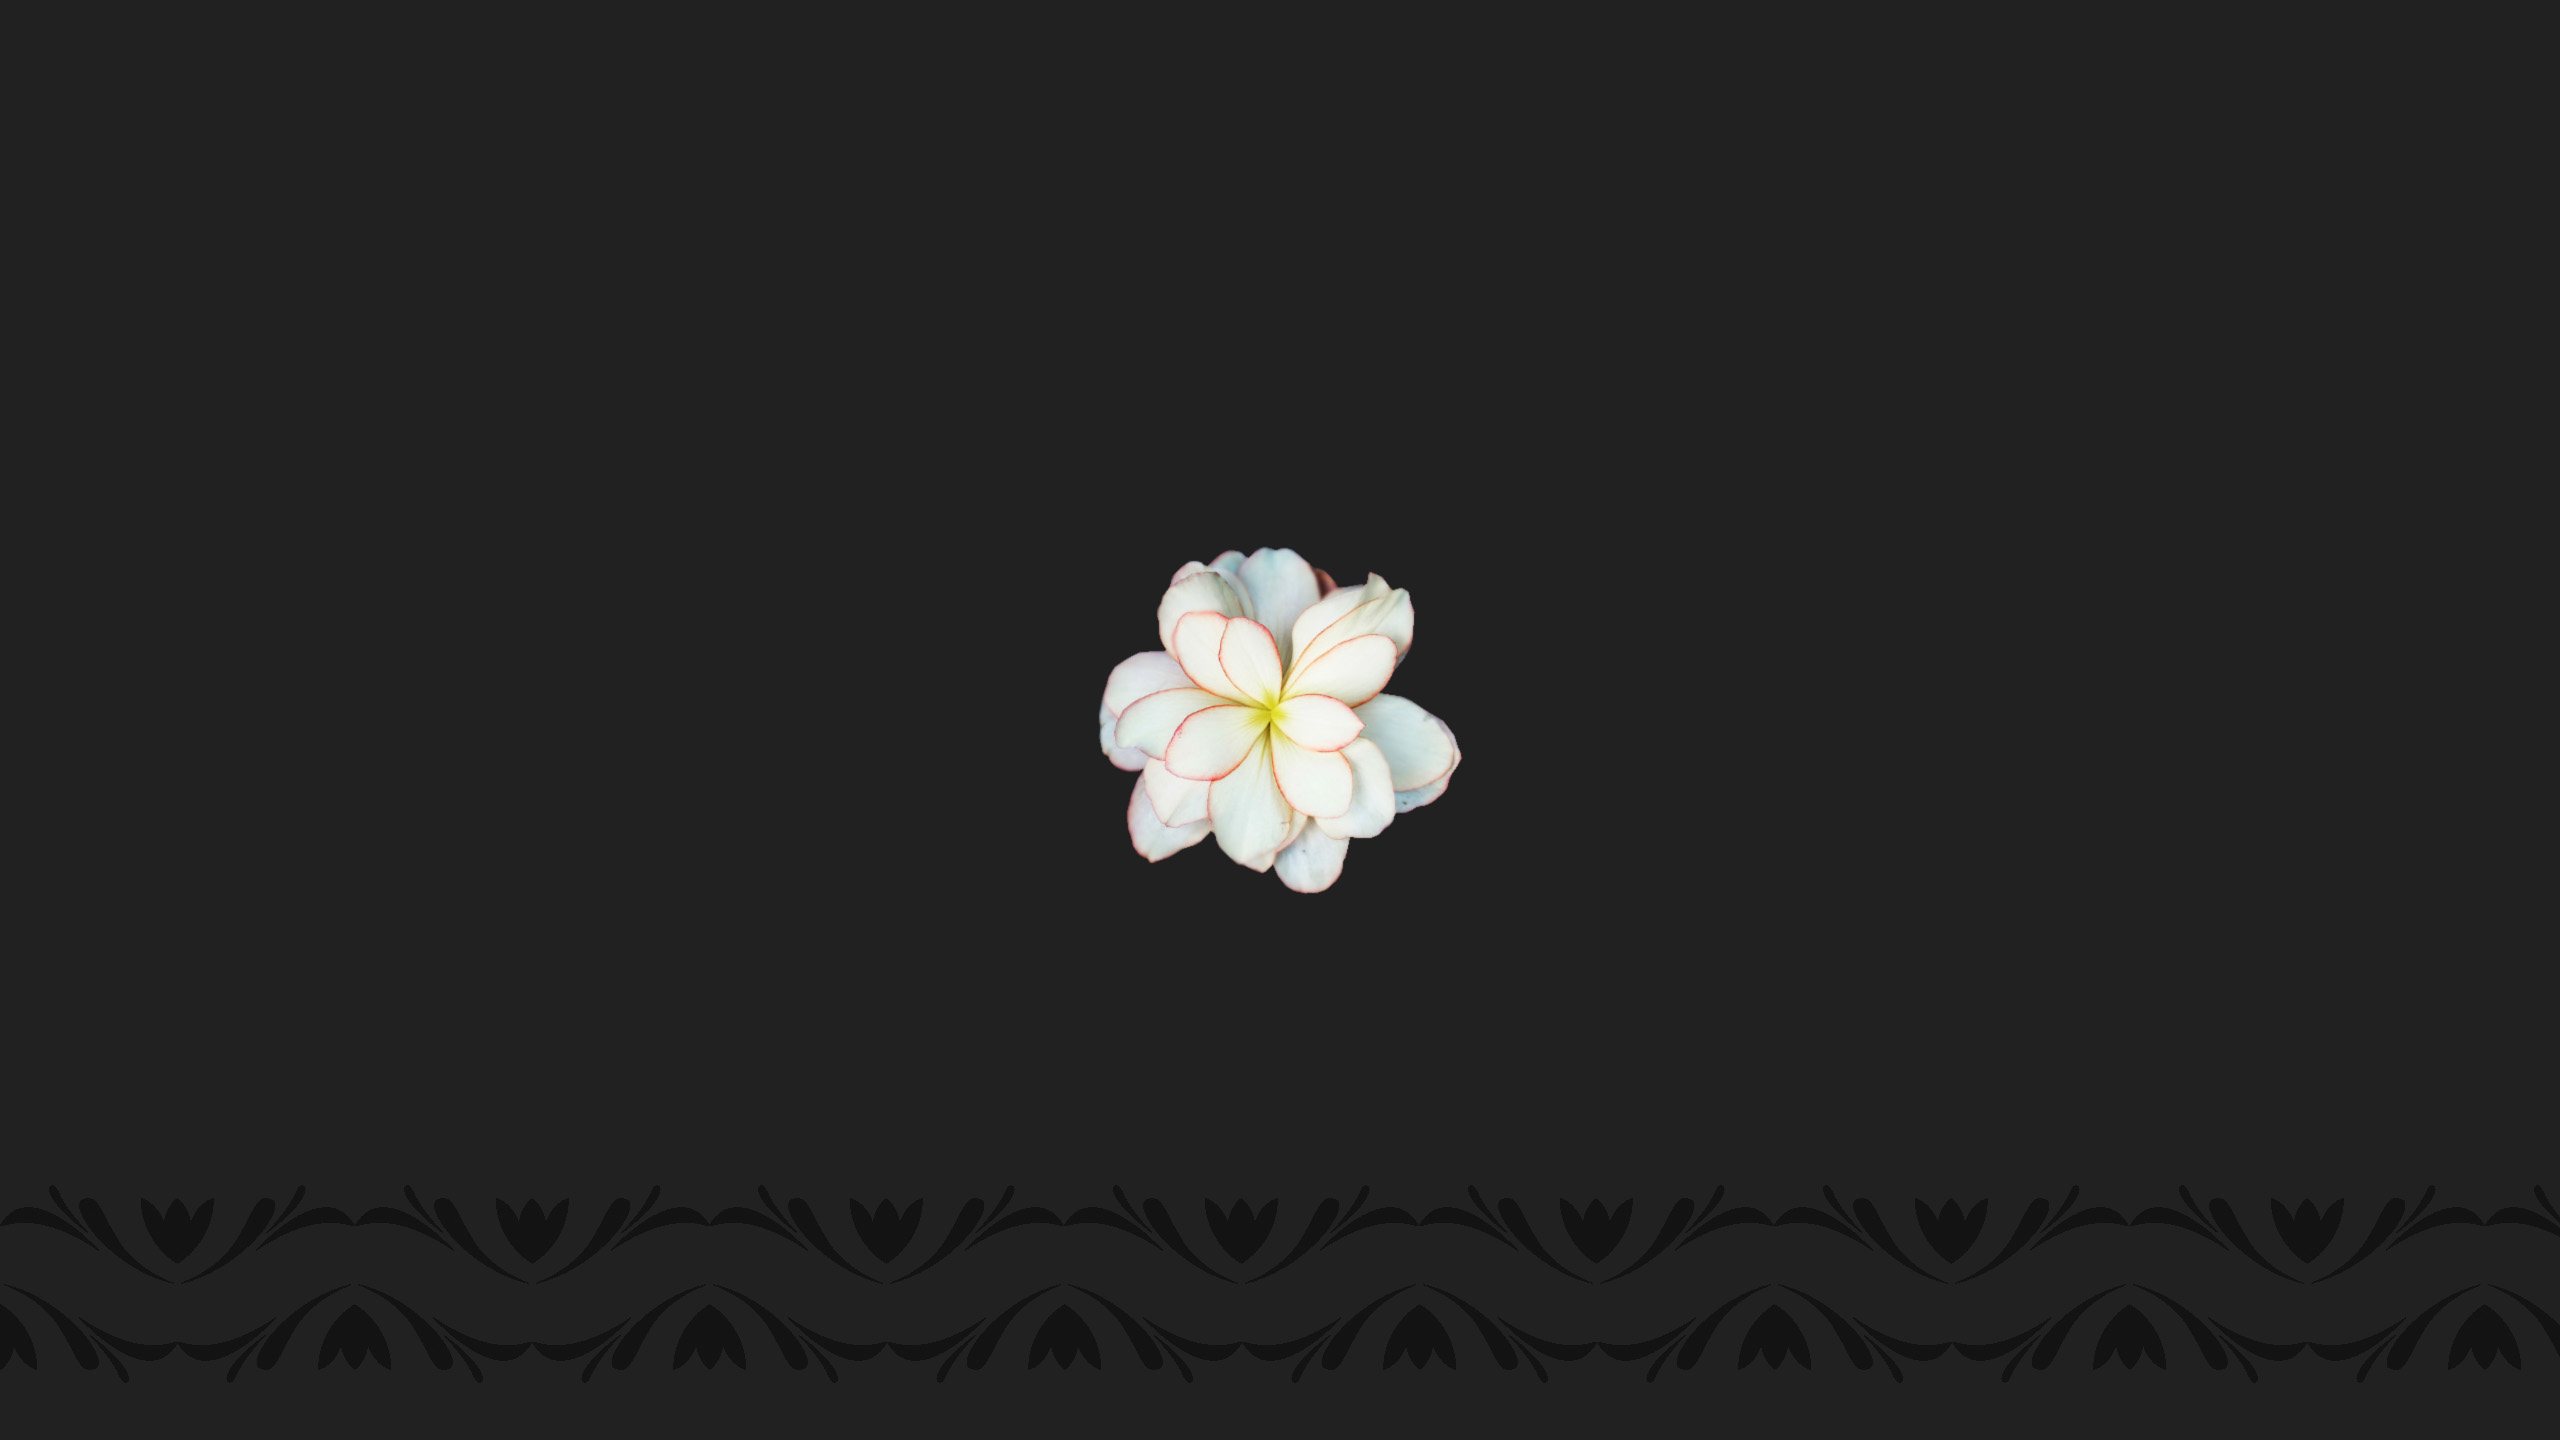 Flower Frangipani 2560x1440